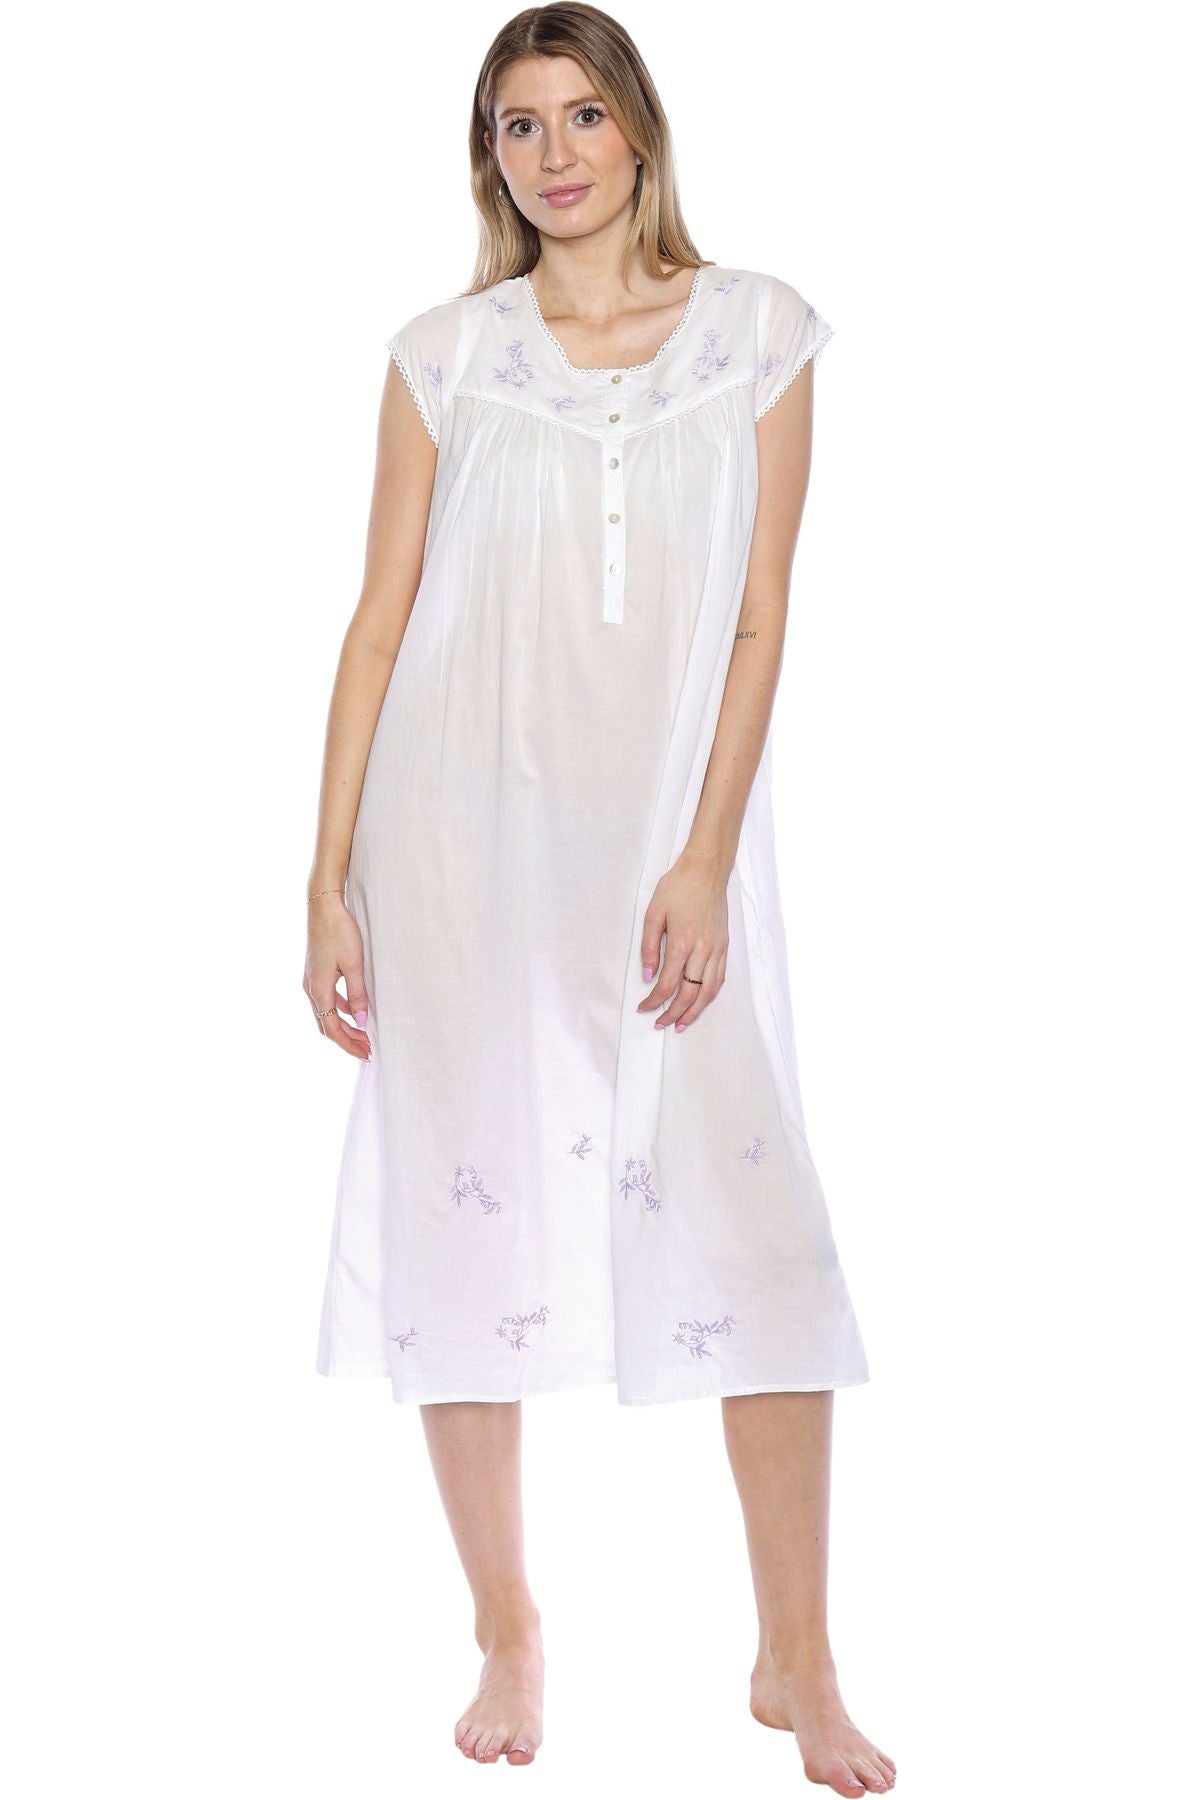 Papa 100% Cotton Long Nightgown - Style PJ4474